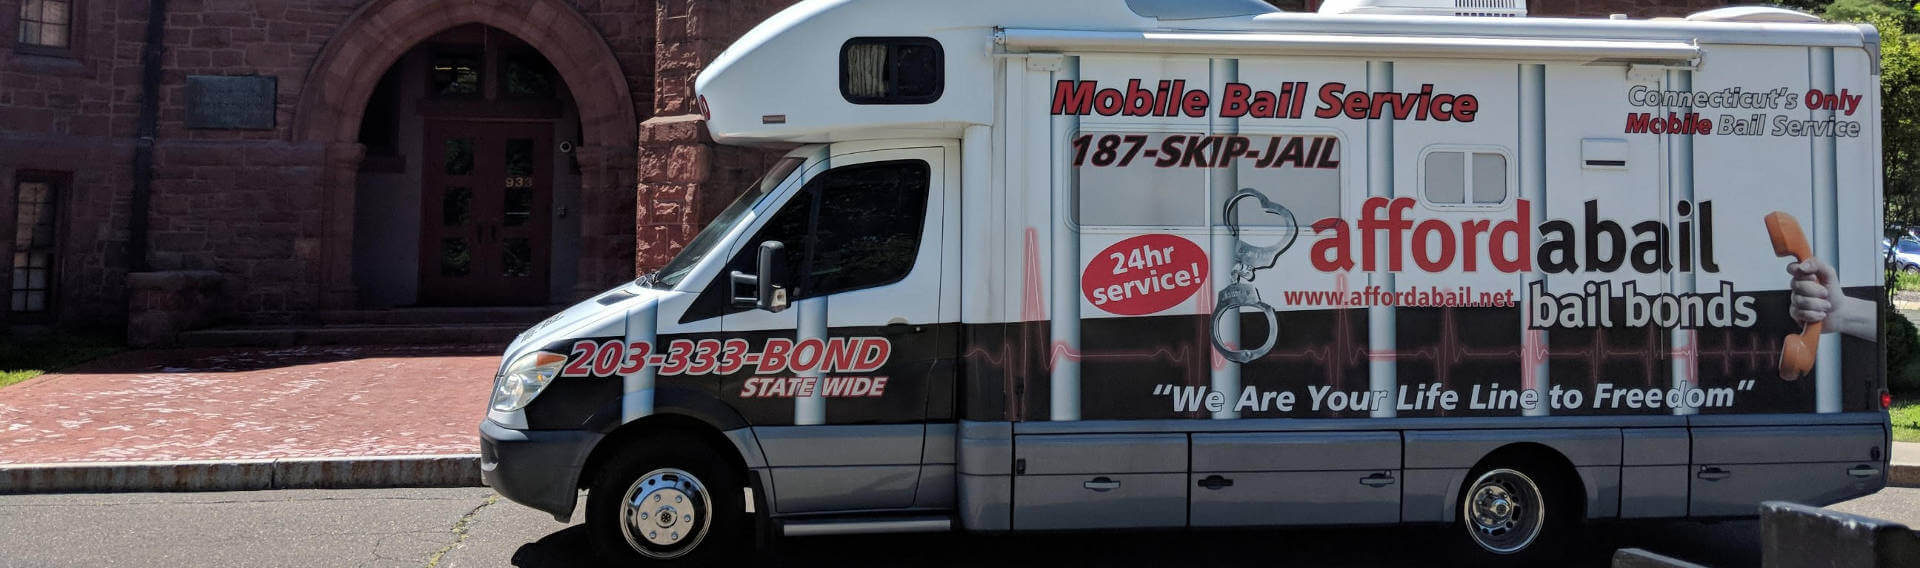 Mobile bail bonds service in Seymour CT